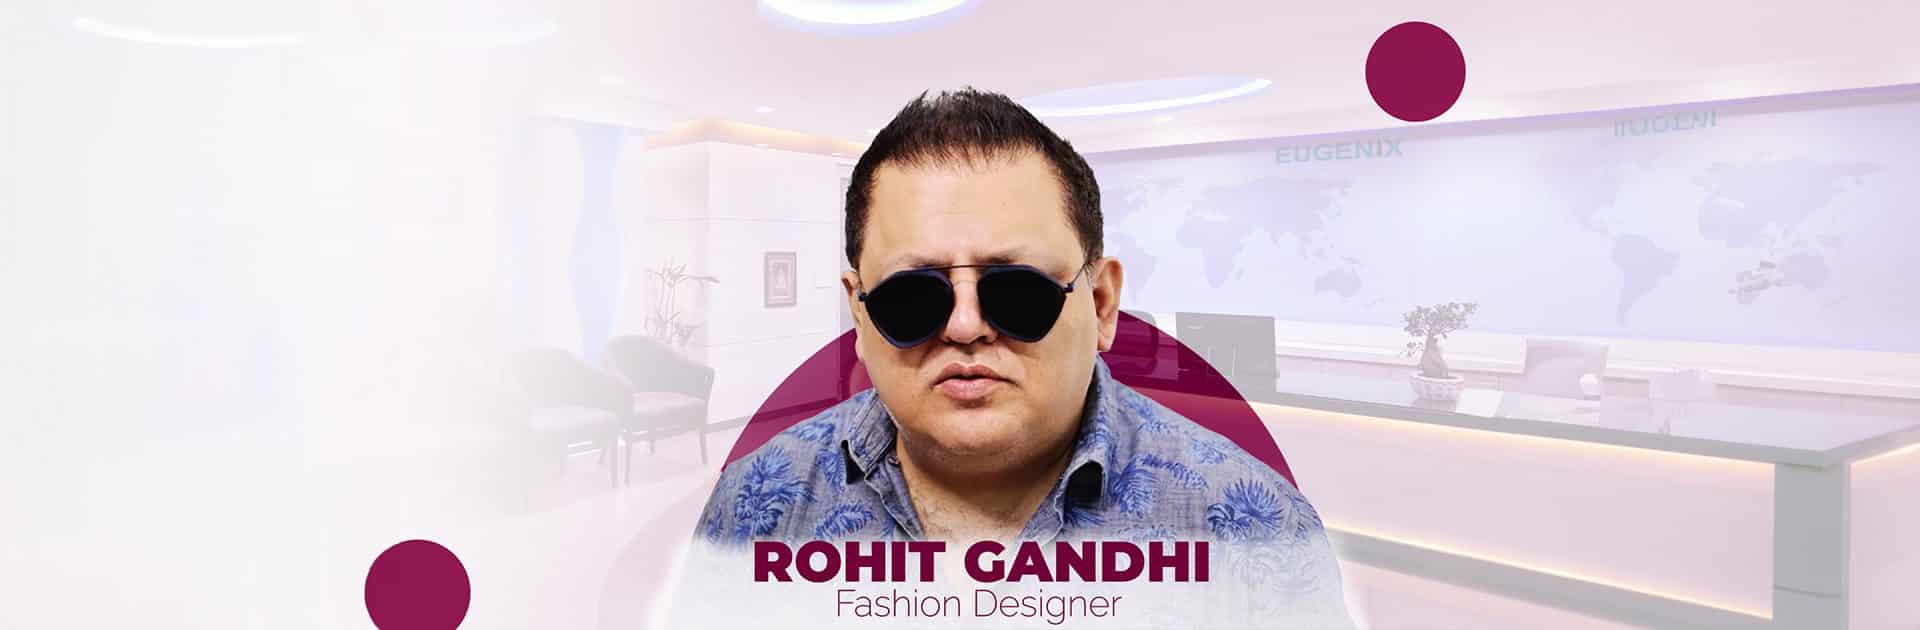 Corrective Hair Transplant: Fashion Icon Rohit Gandhi Shares His Hair Transplant Journey with Eugenix